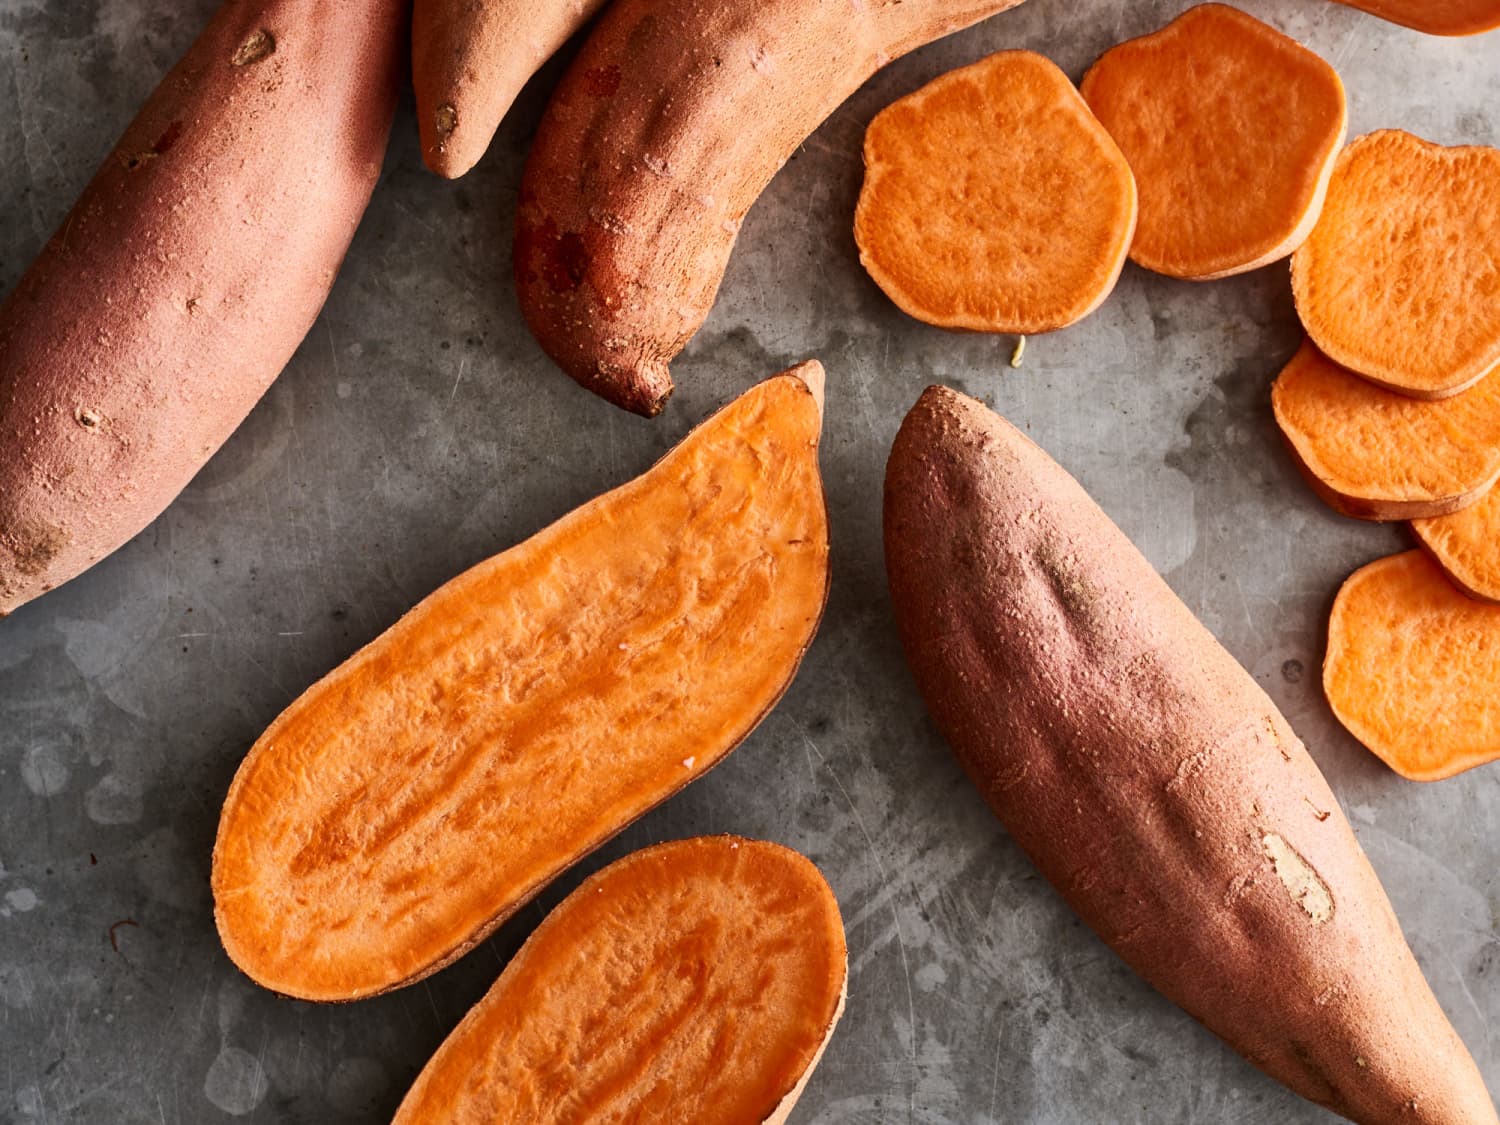 How to Store Sweet Potatoes